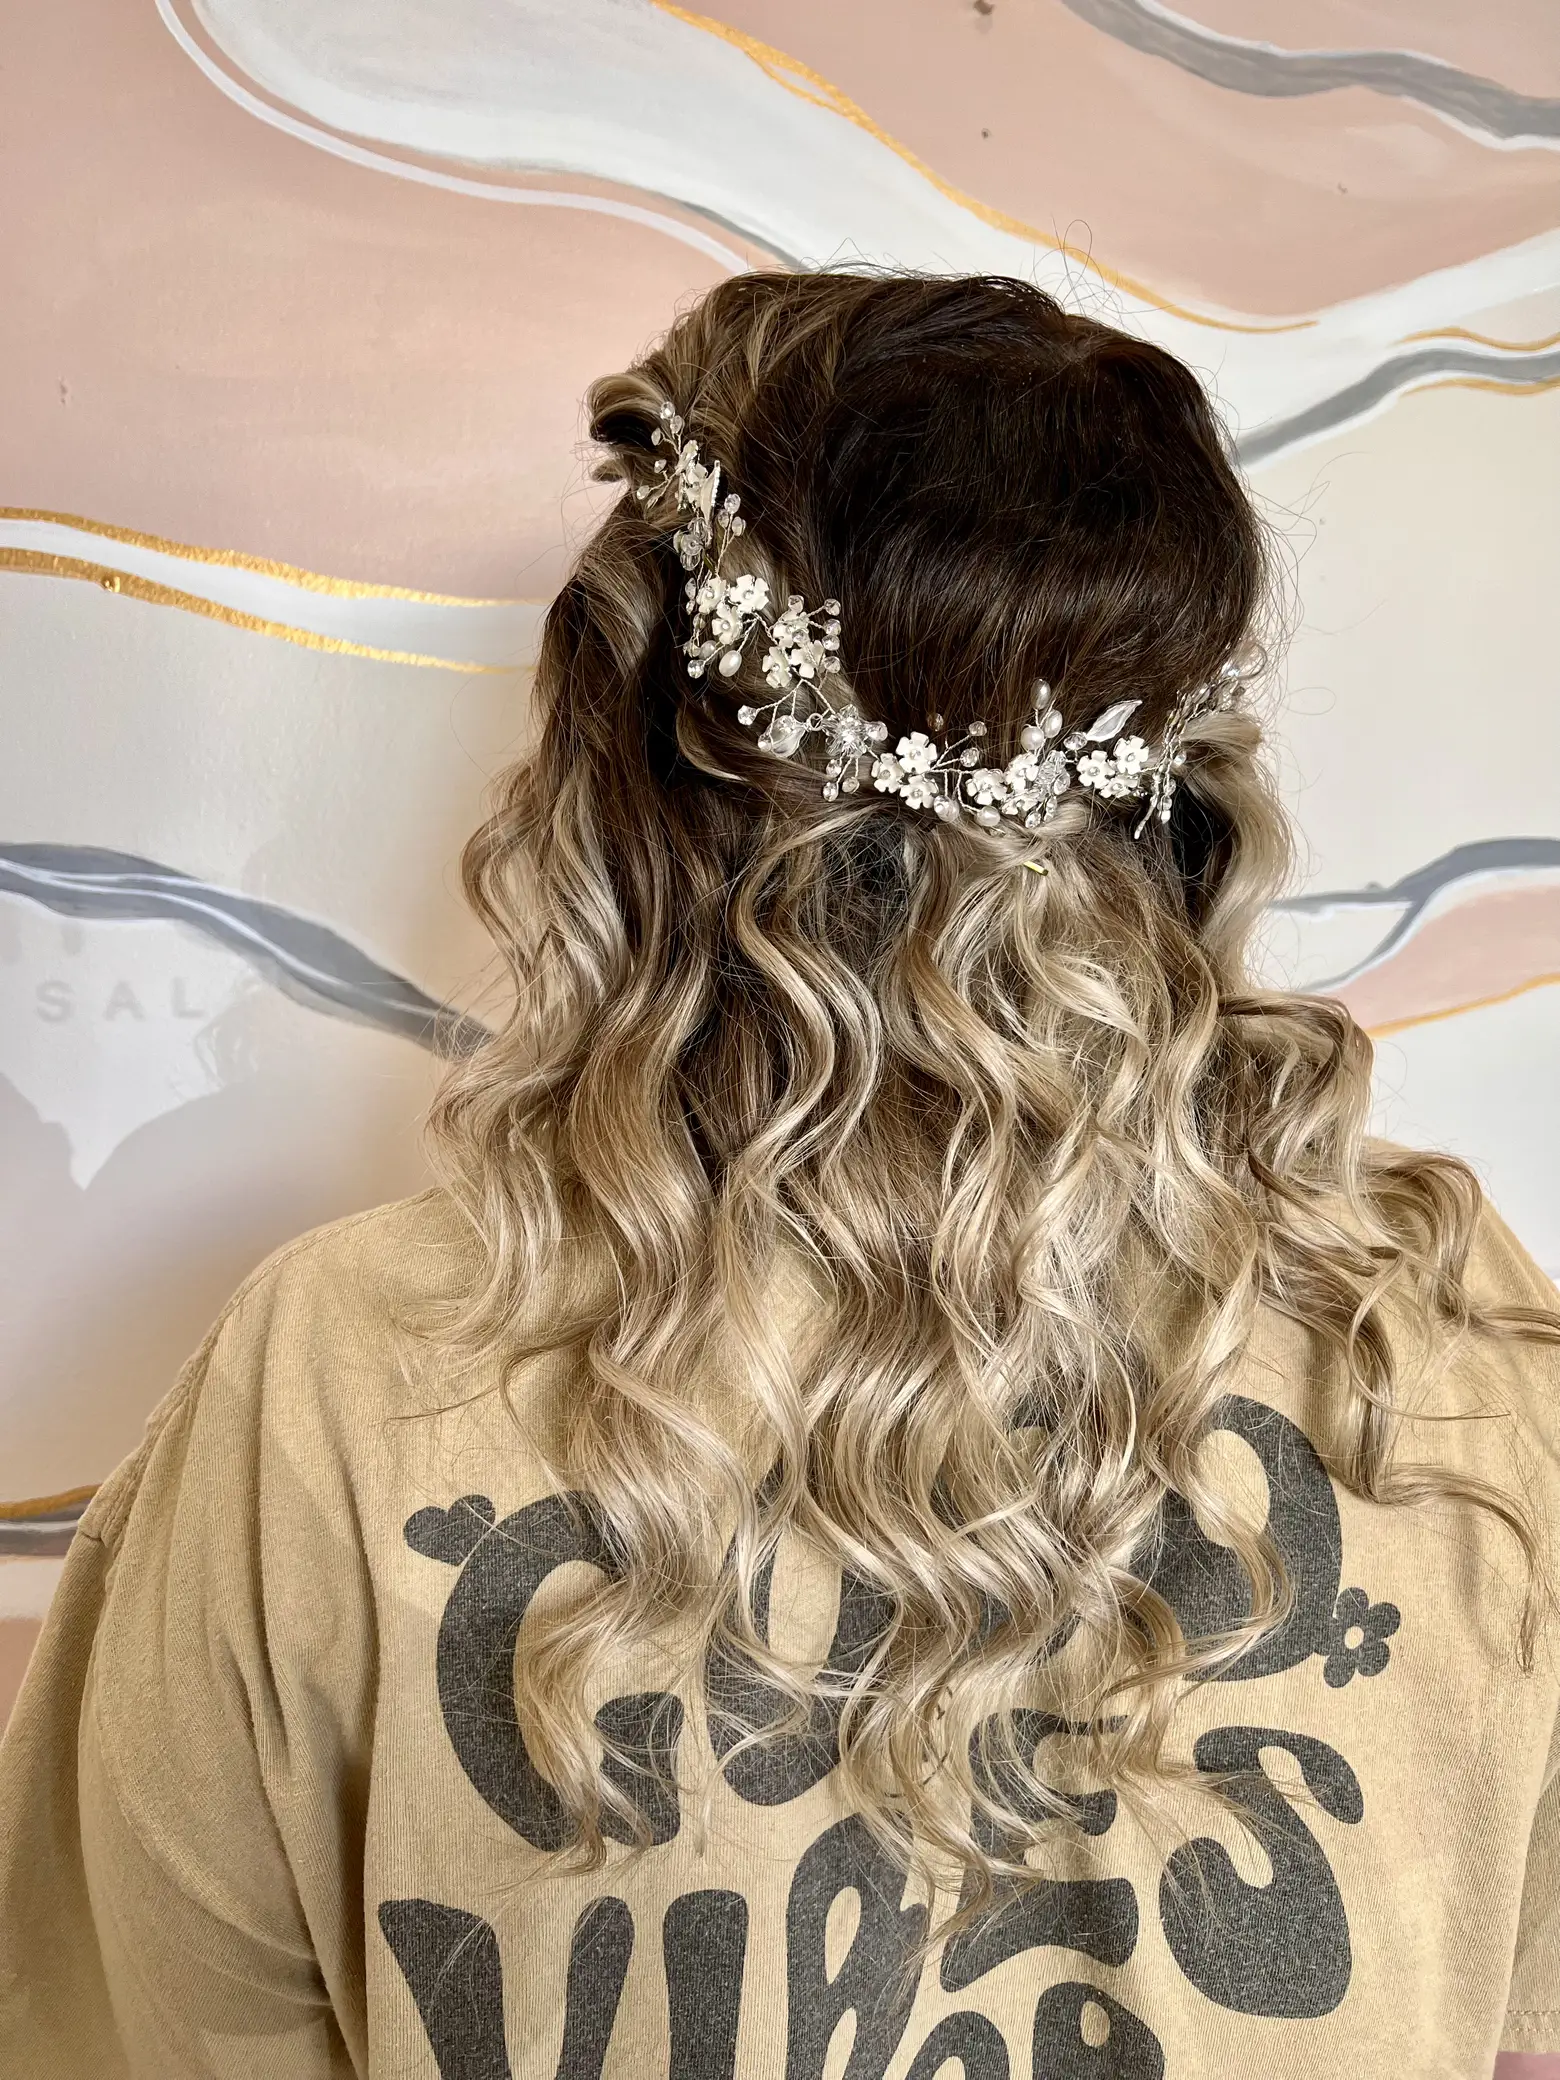 bridal hair thread- save for ur wedding day💍➡️, Gallery posted by Macie  Stafford